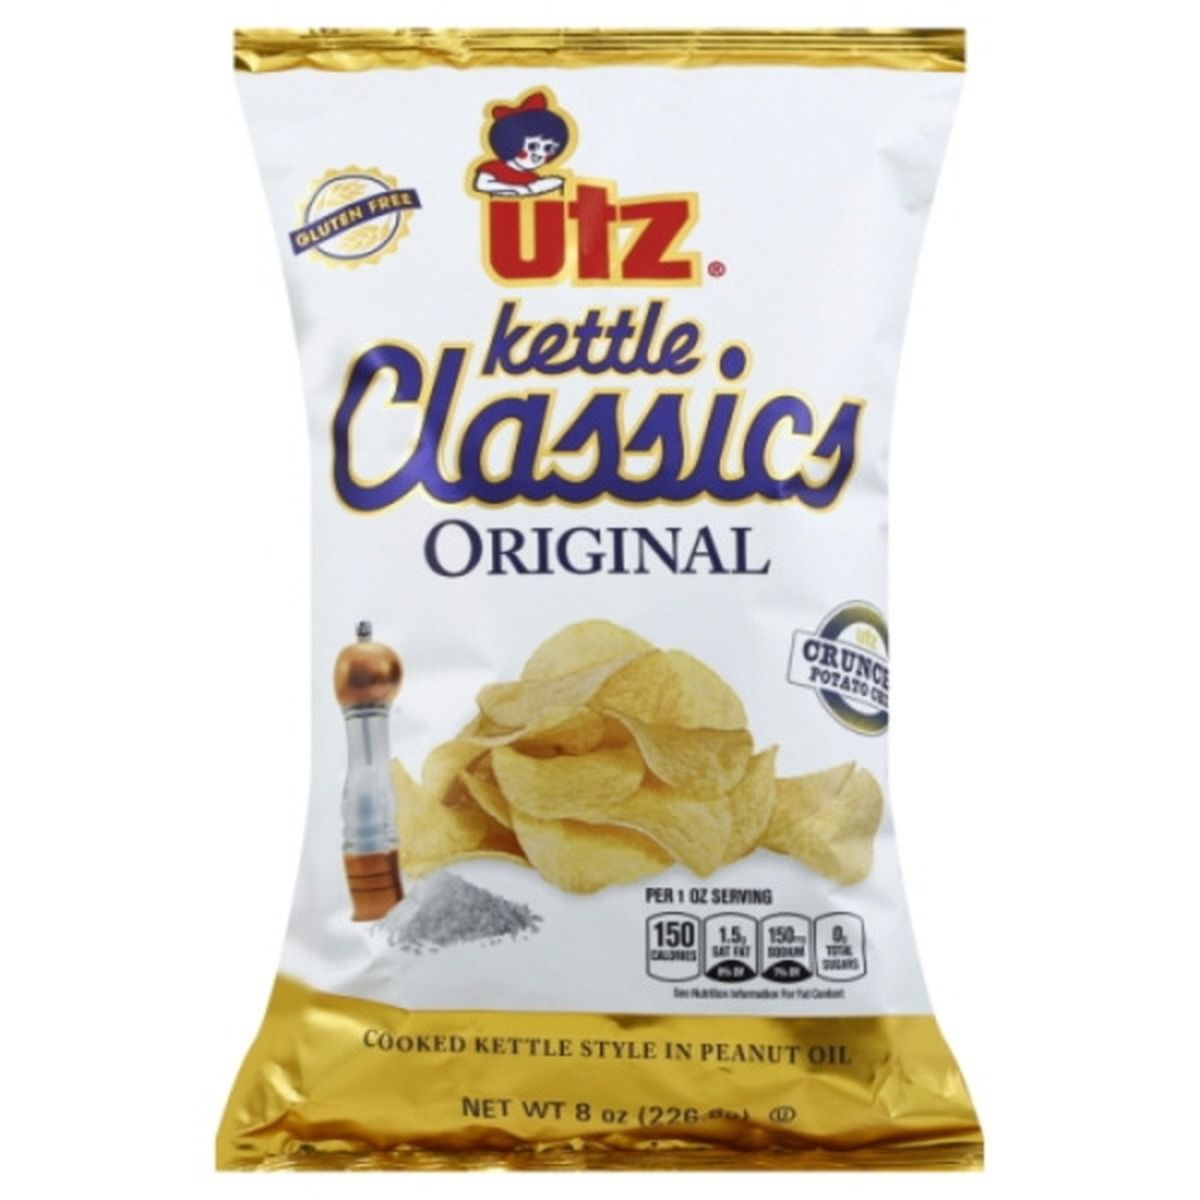 Calories in Utz Kettle Classics Potato Chips, Crunchy, Original